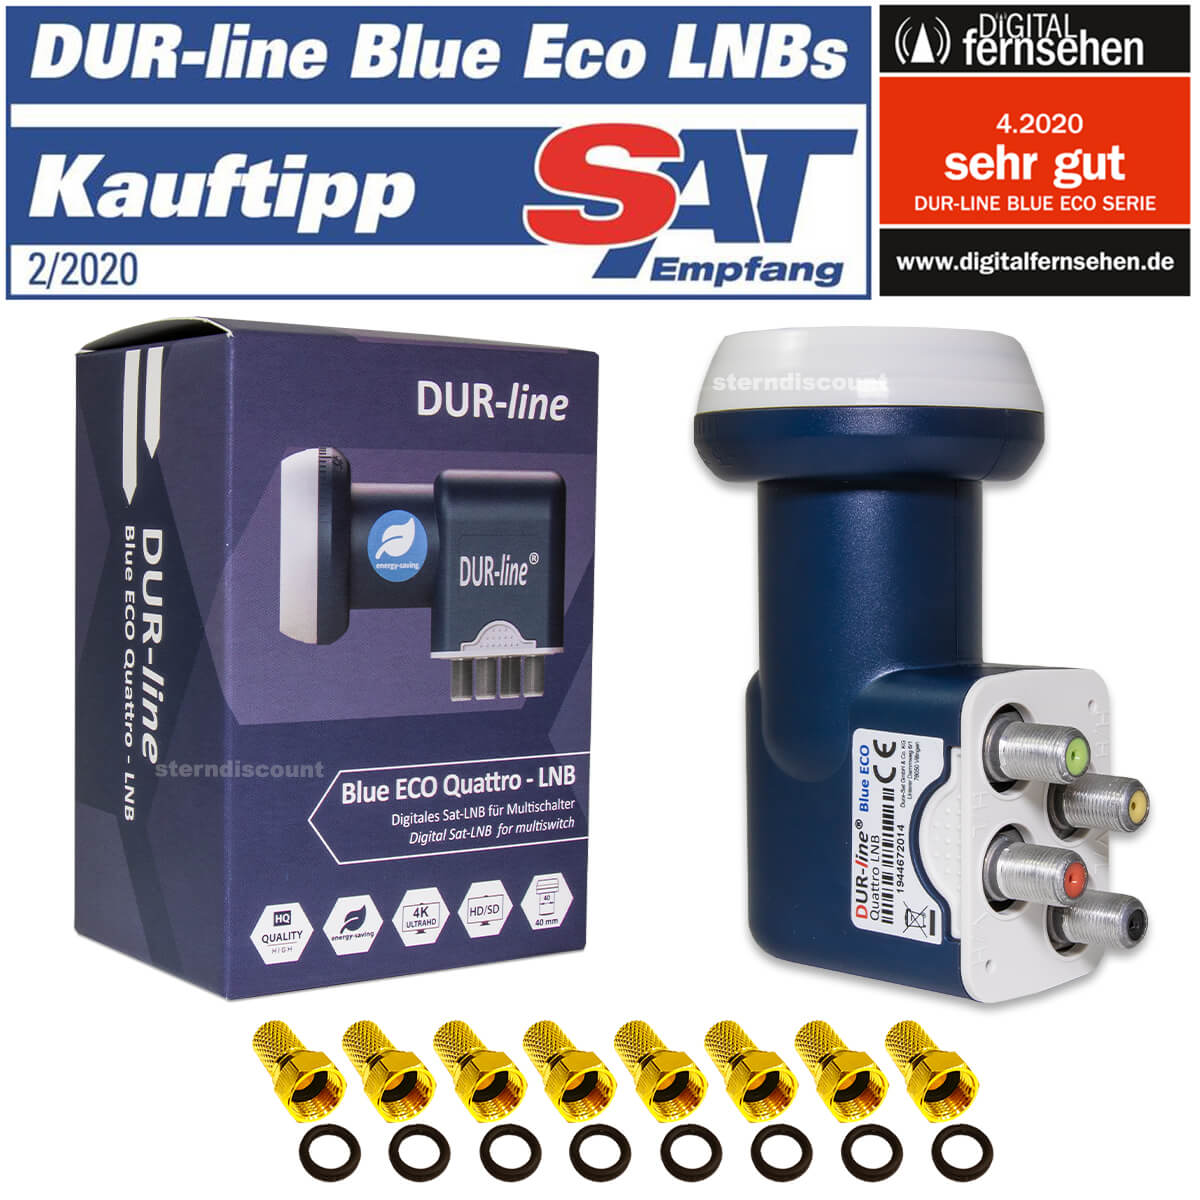 Dur-Line Blue Eco Quattro LNB